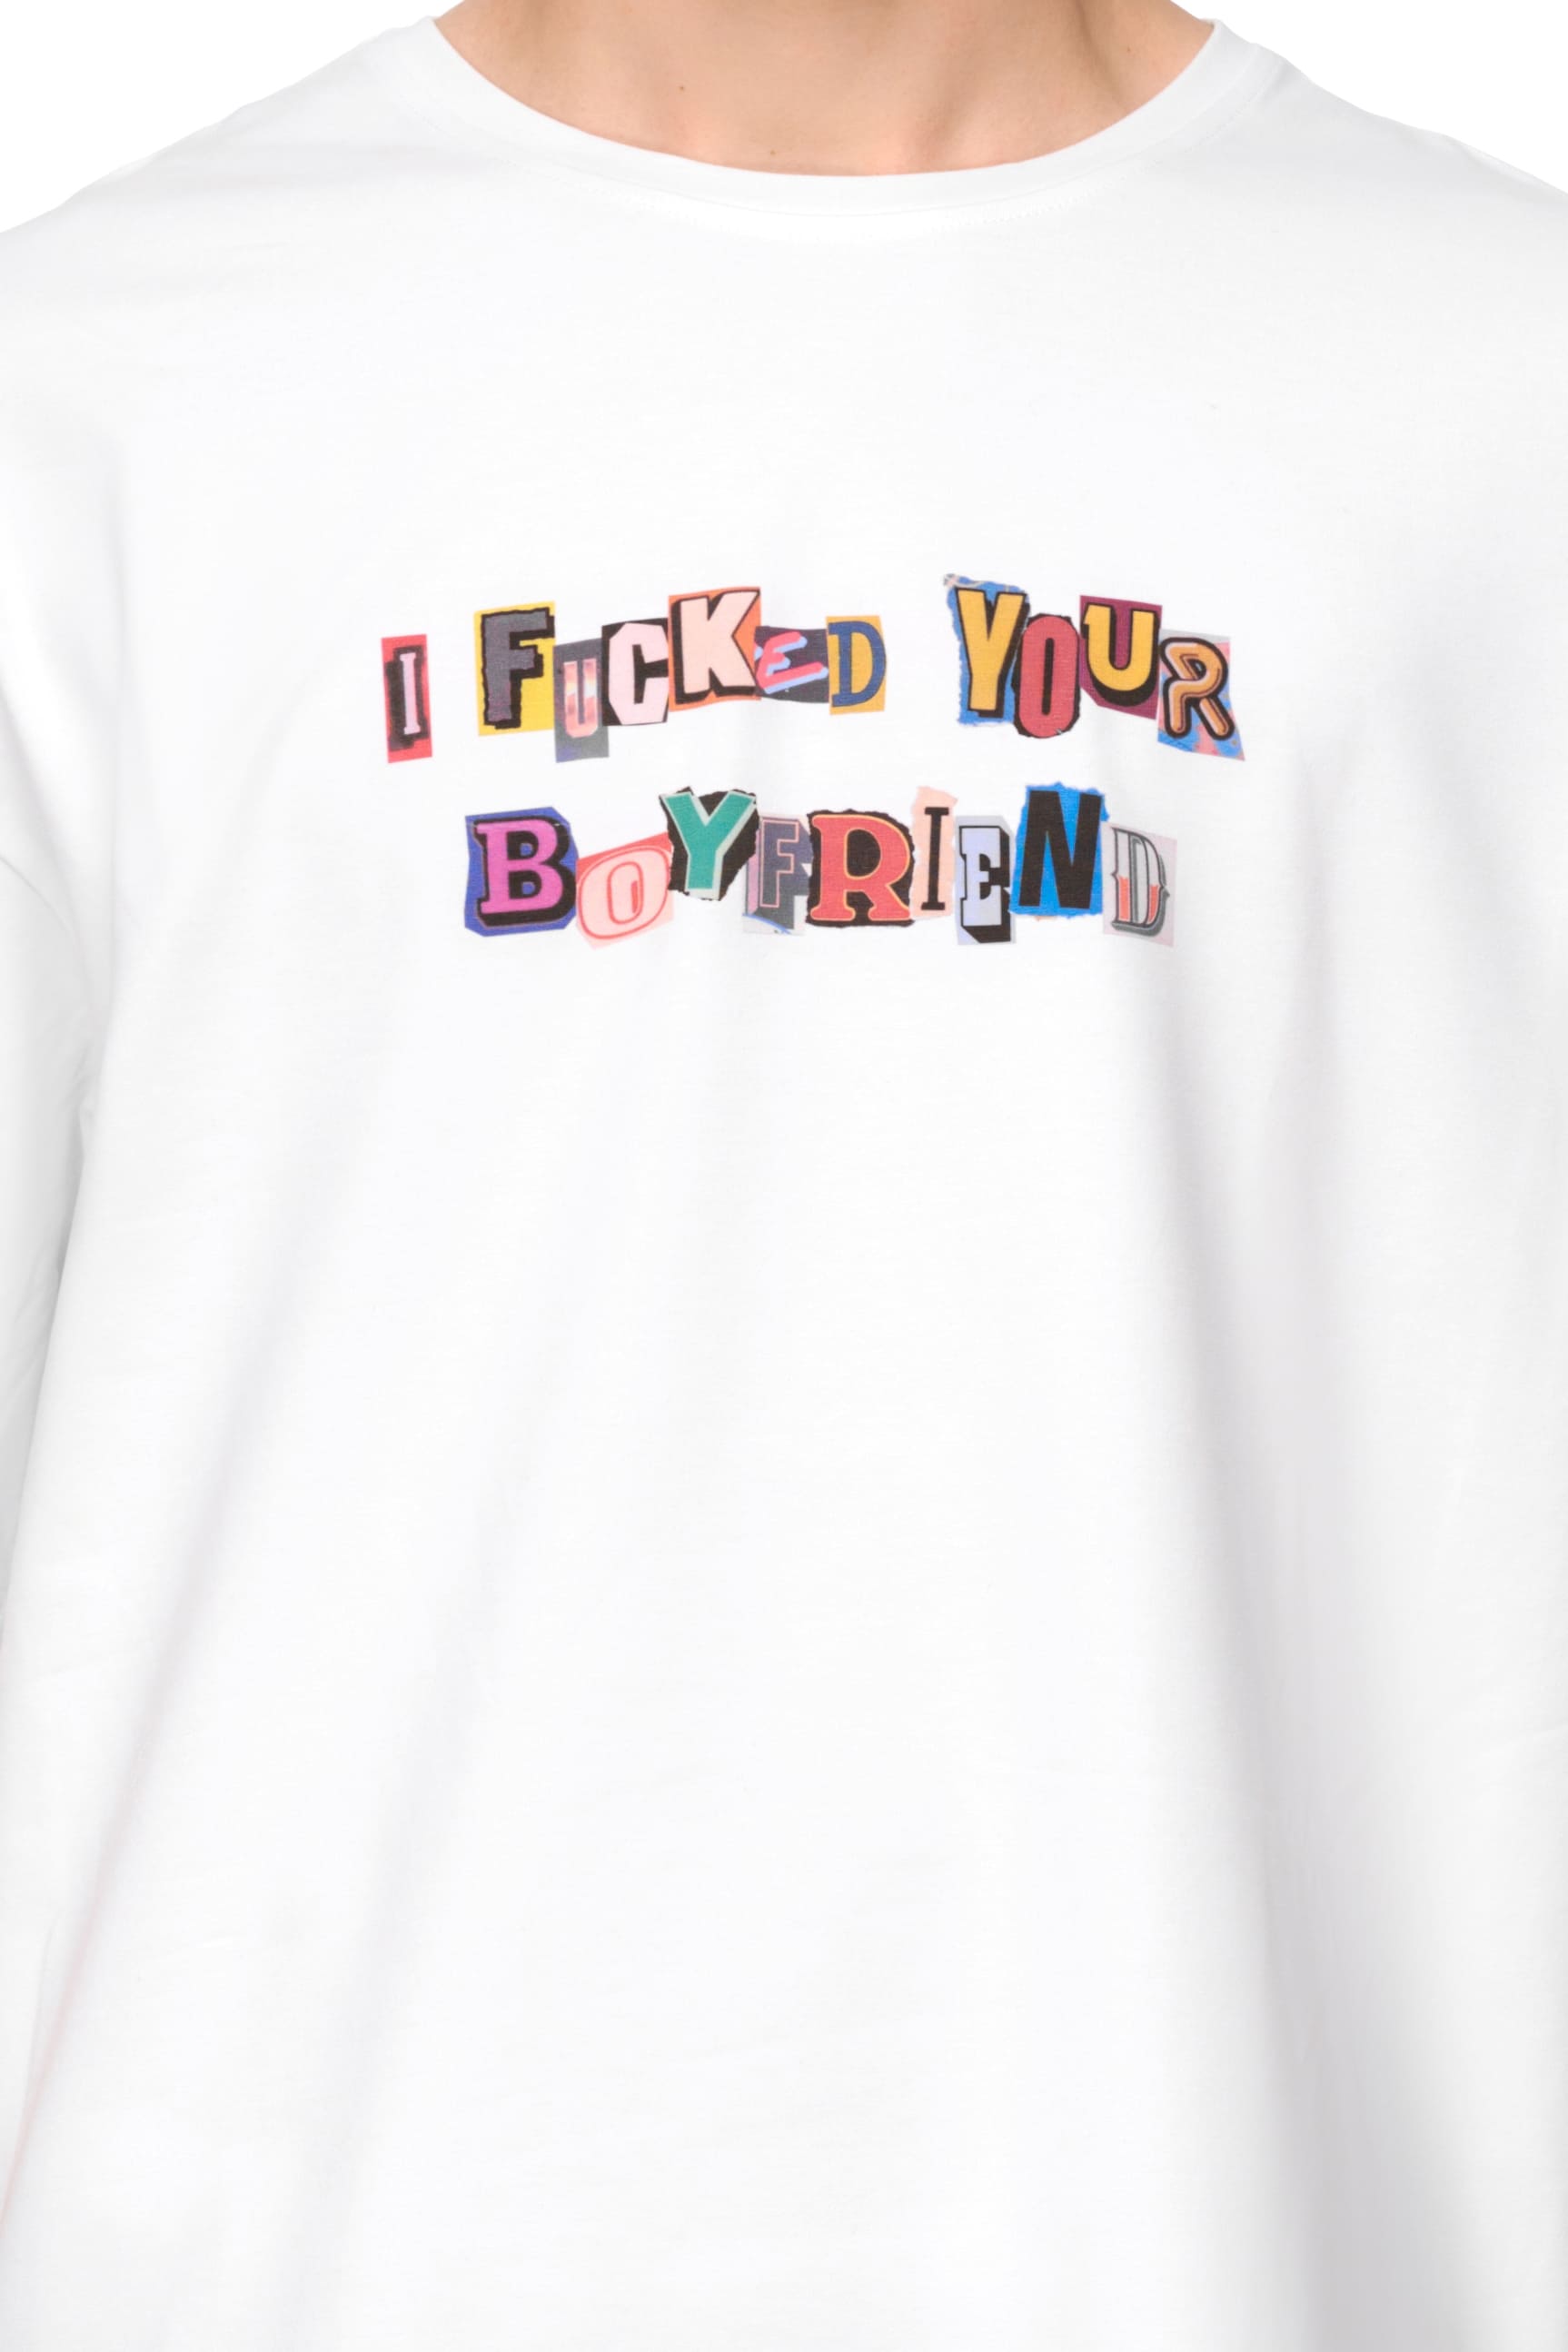 I Fucked Your Boyfriend T-Shirt